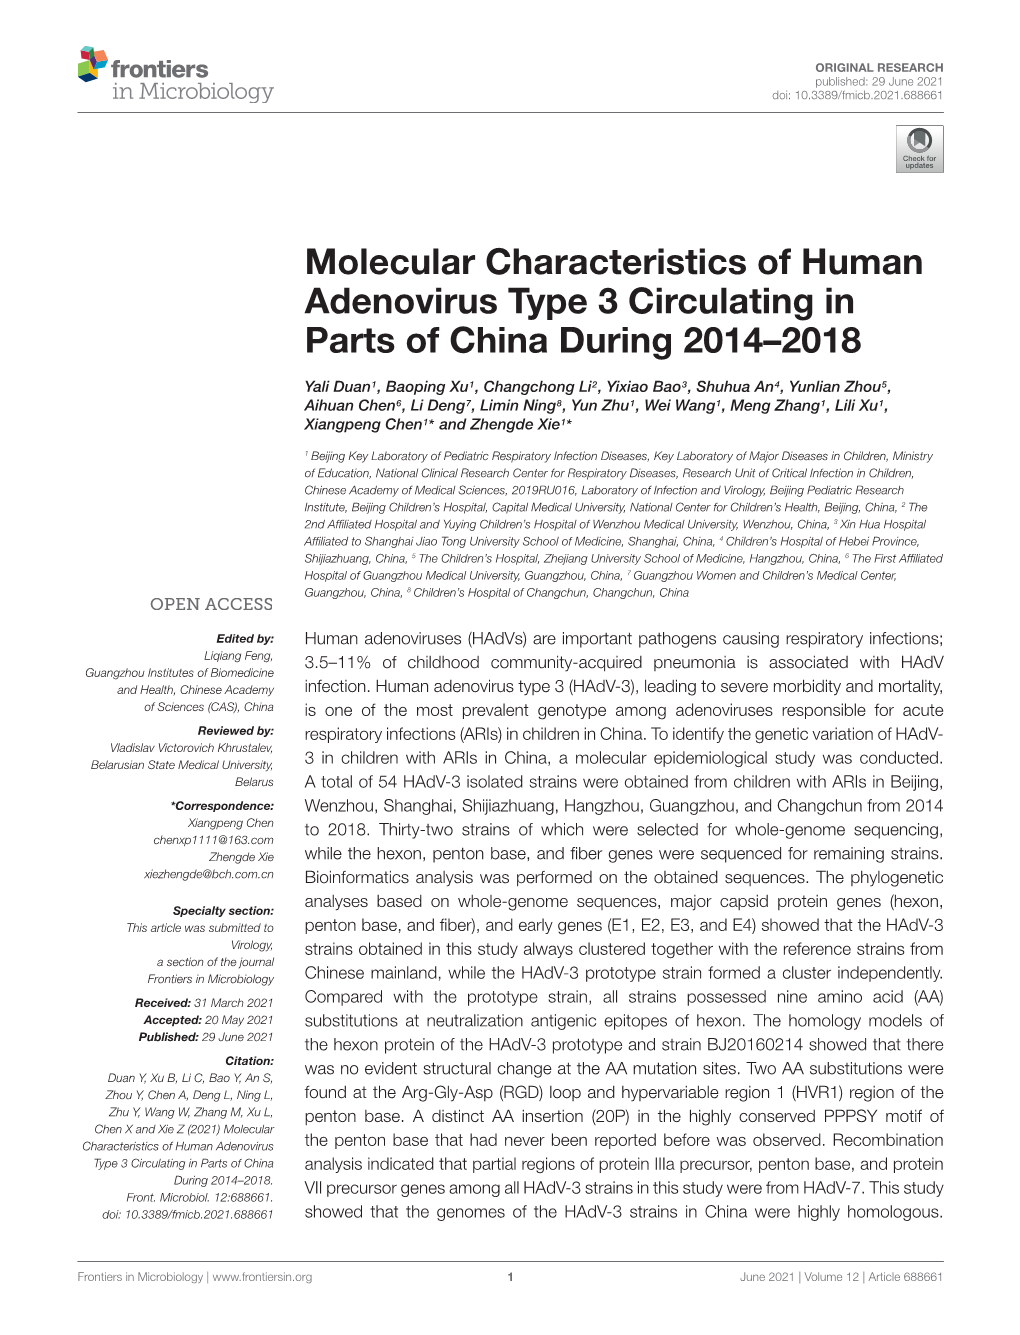 Molecular Characteristics of Human Adenovirus Type 3 Circulating in Parts of China During 2014–2018